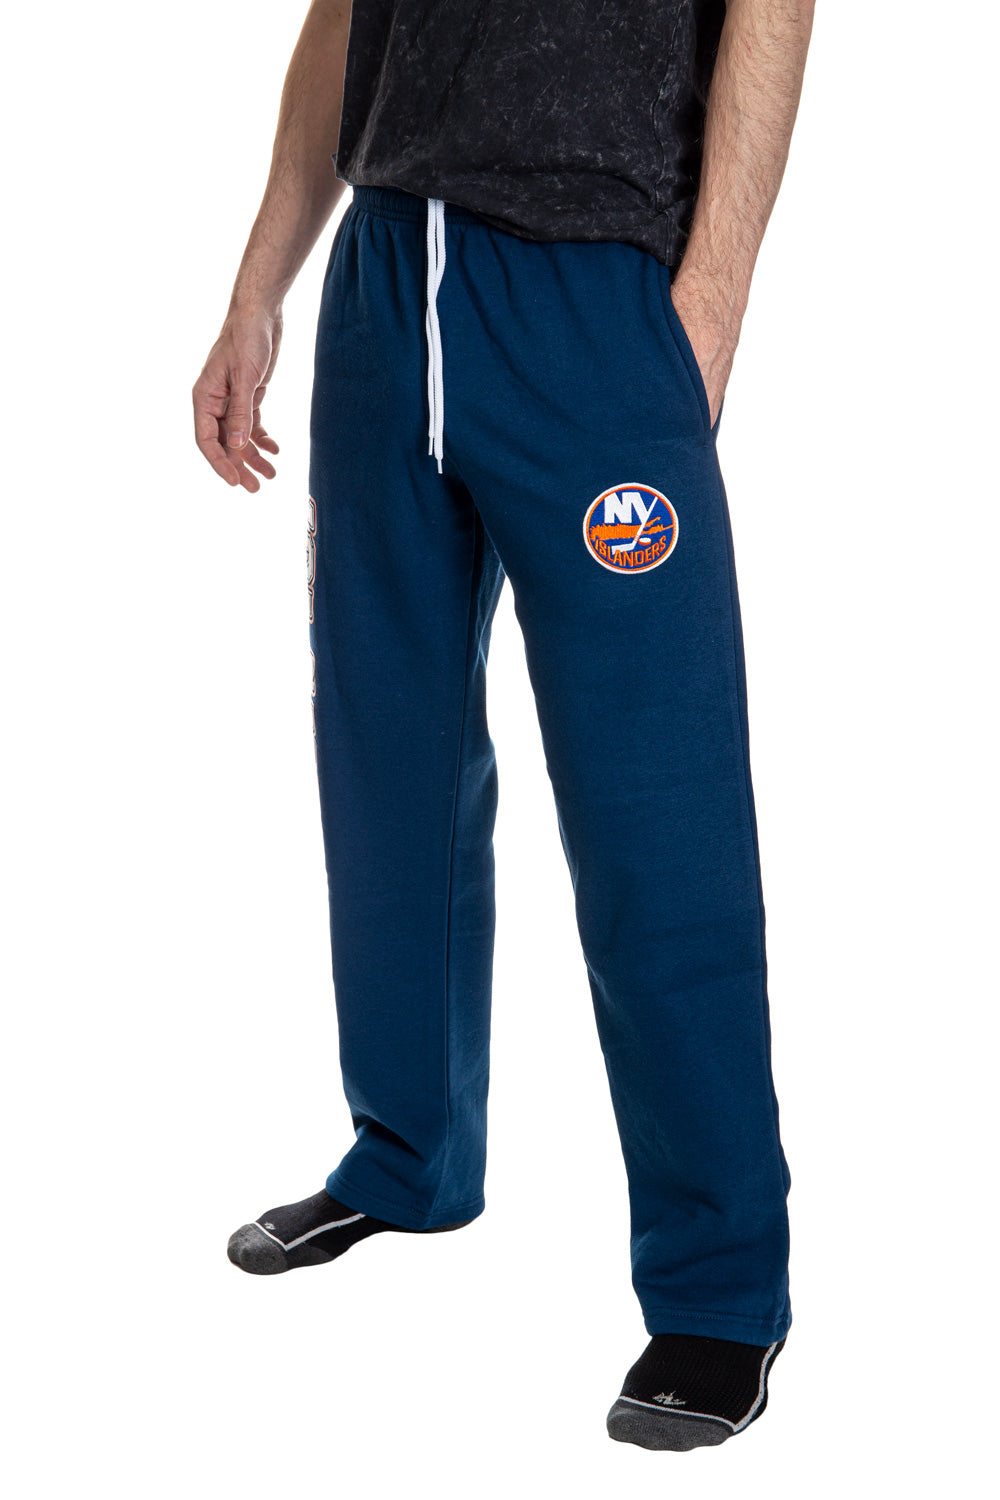 New York Islanders Premium Fleece Sweatpants Side View Embroidered Logo.